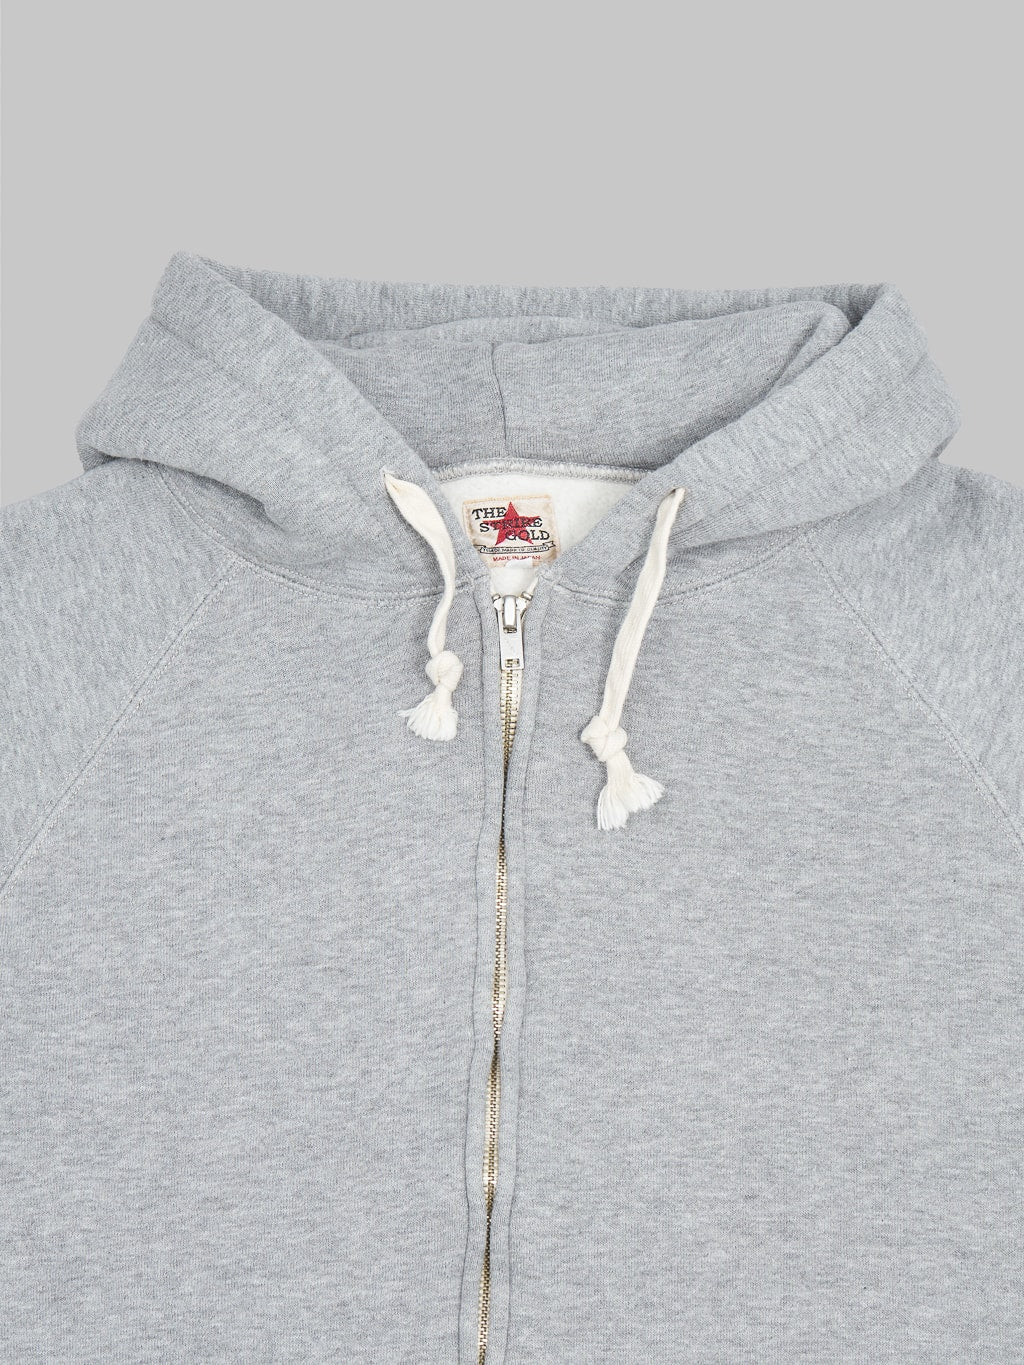 the strike gold zip hoodie grey front details